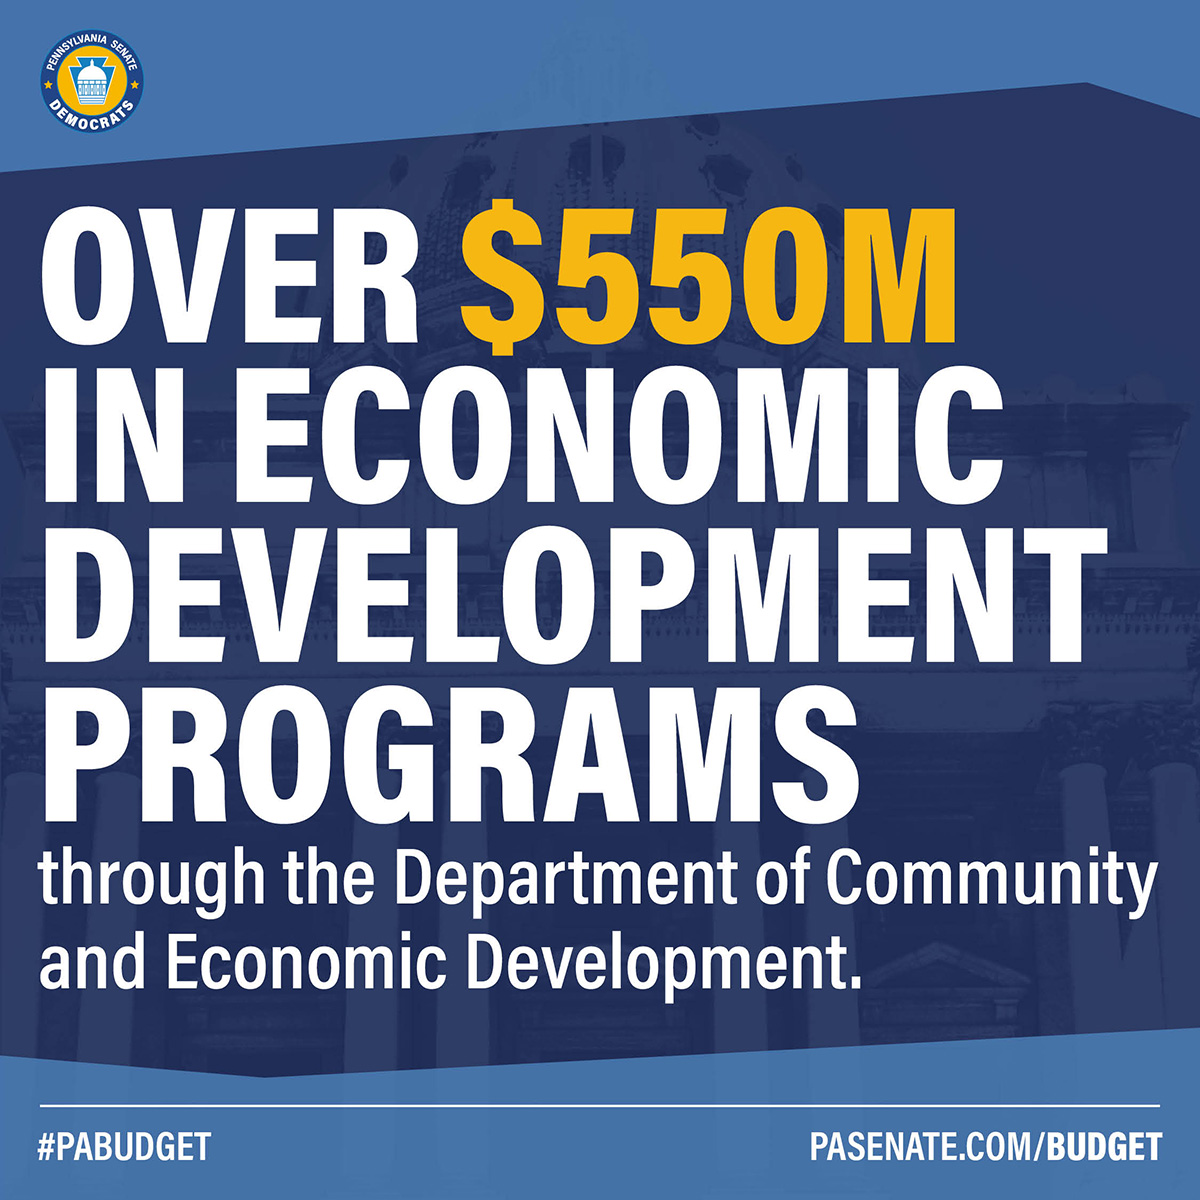 Over $550M in economic development programs through the Department of Community and Economic Development